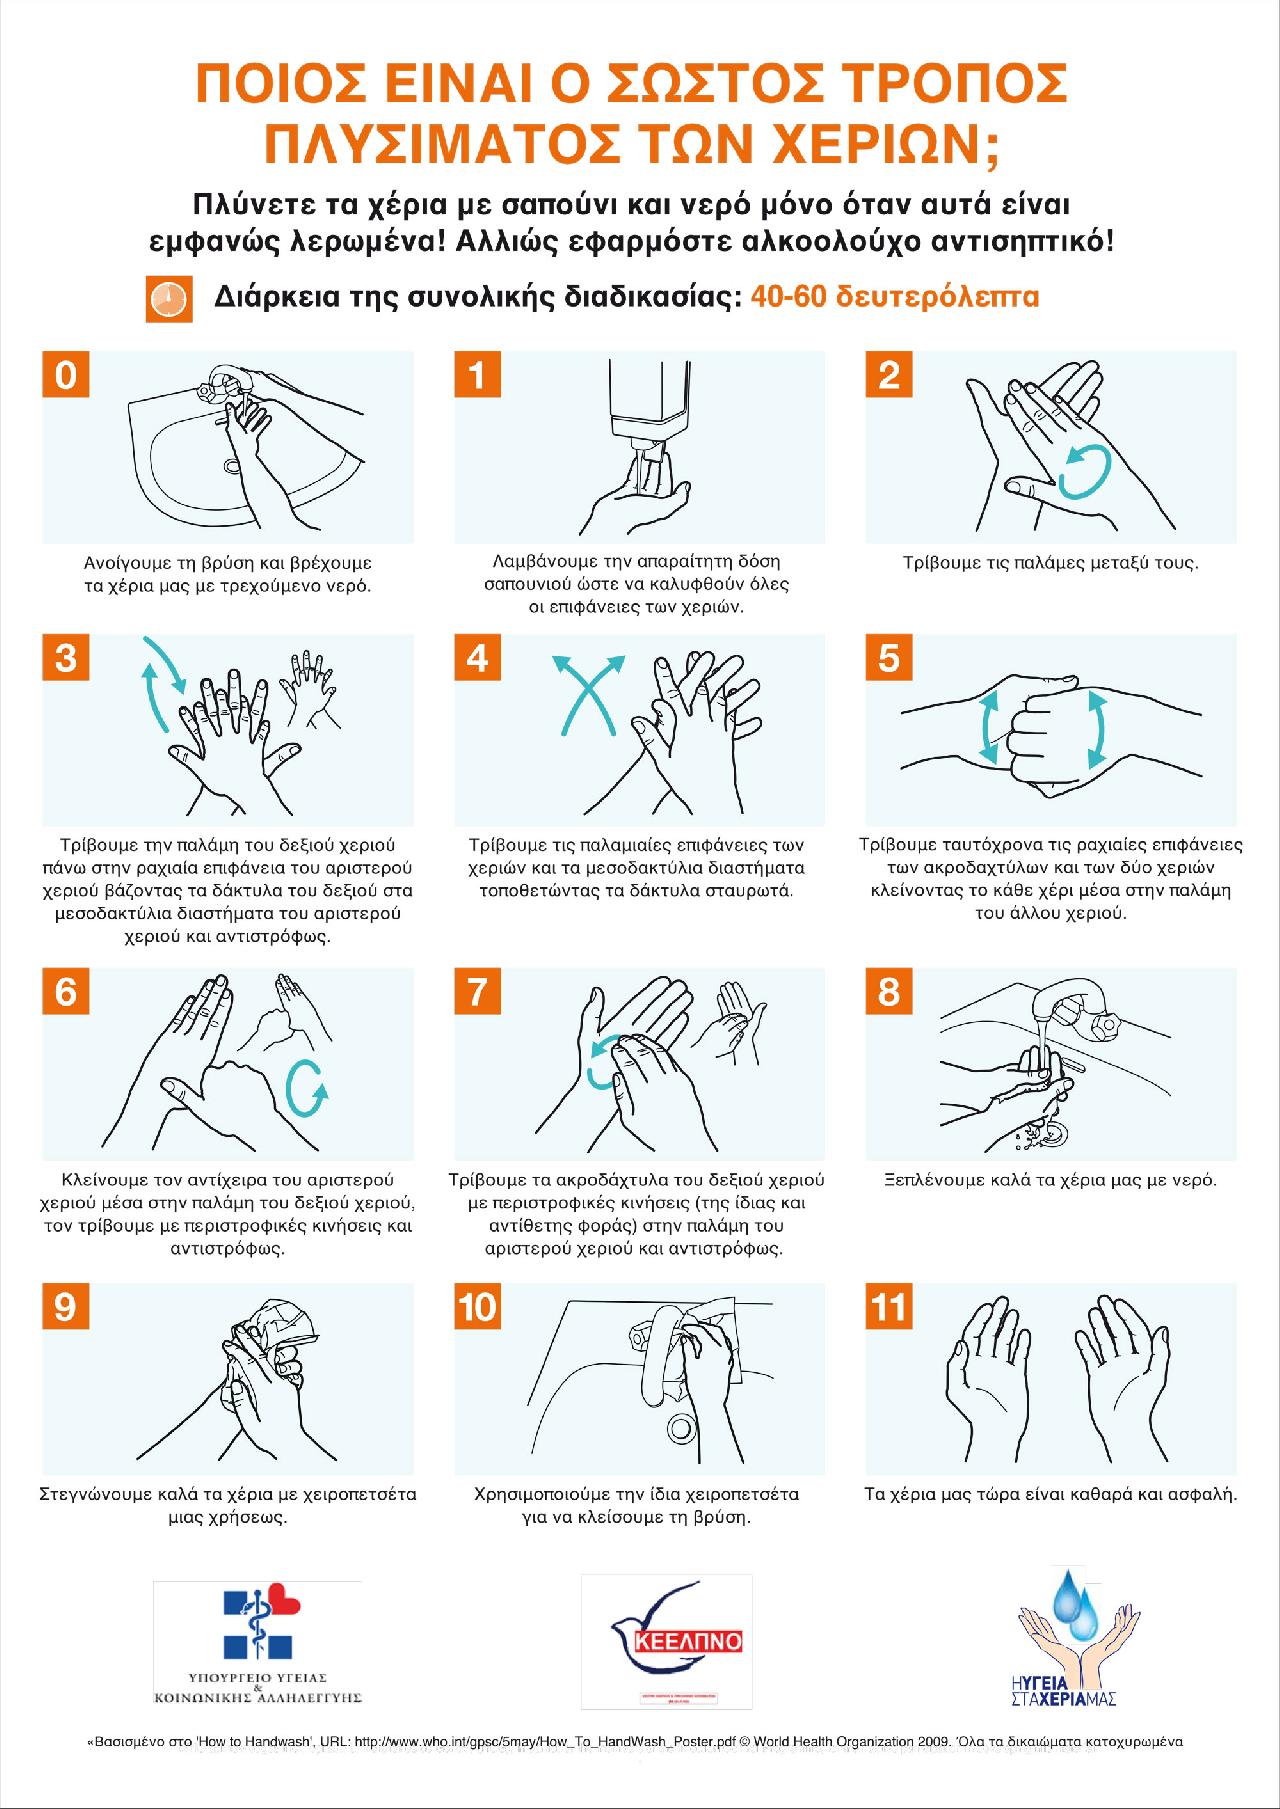 Oδηγίες για τον σωστό πλύσιμο των χεριών